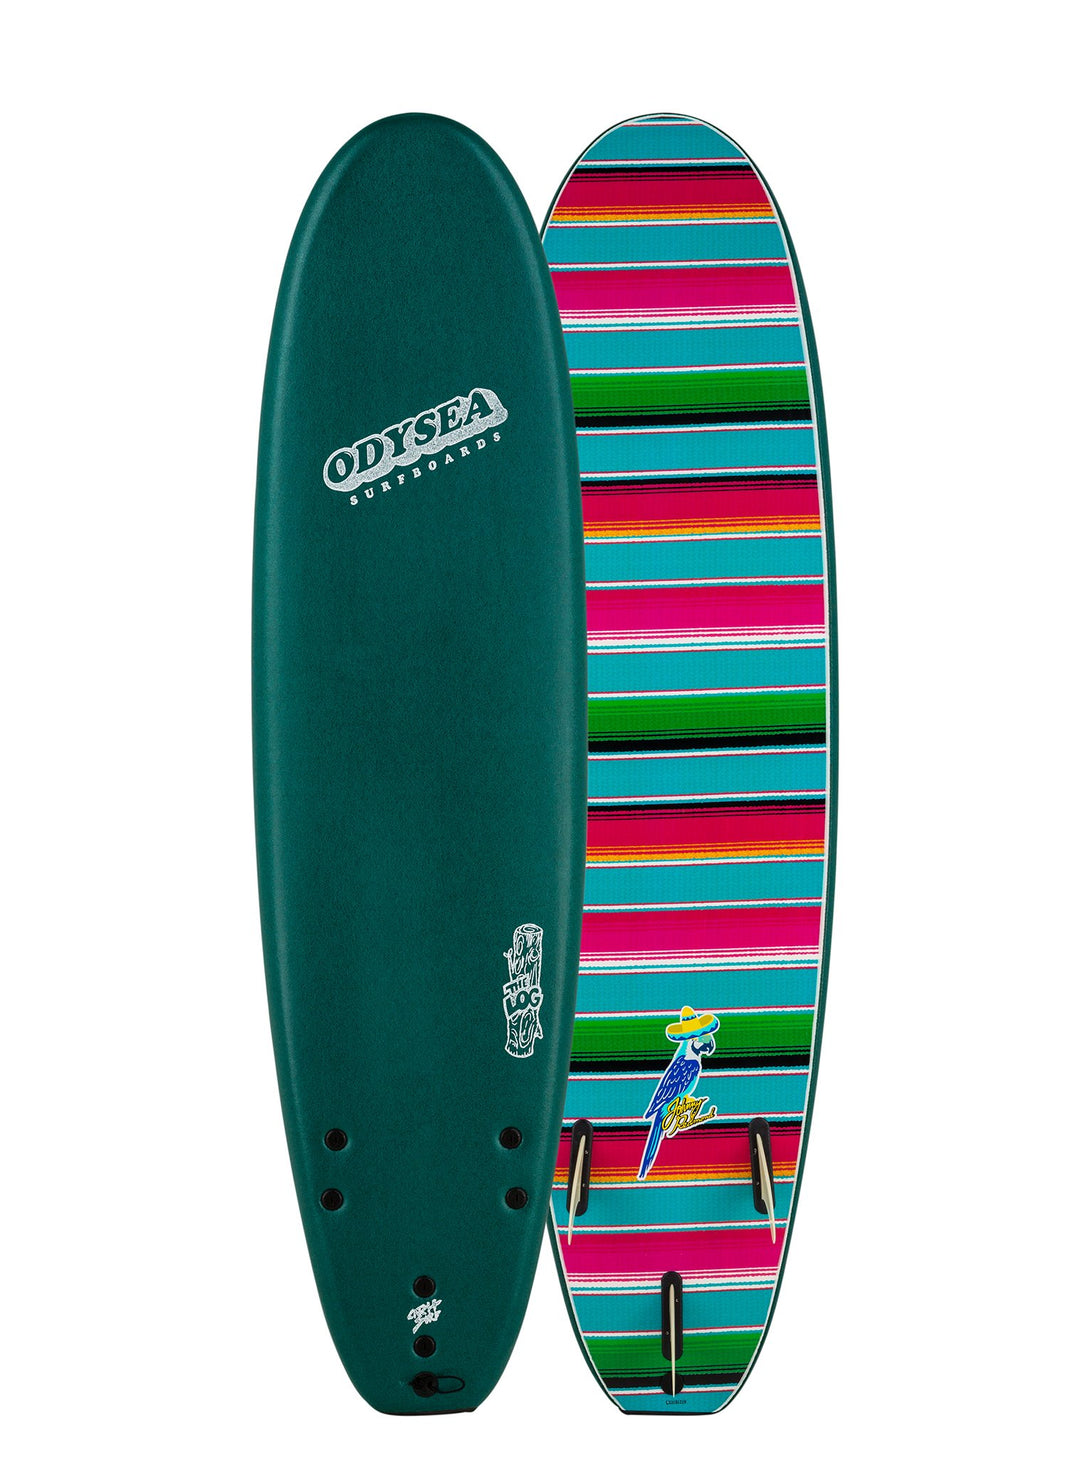 Catch Surf Odysea 7ft Johnny Redmond Log Pro Surfboard